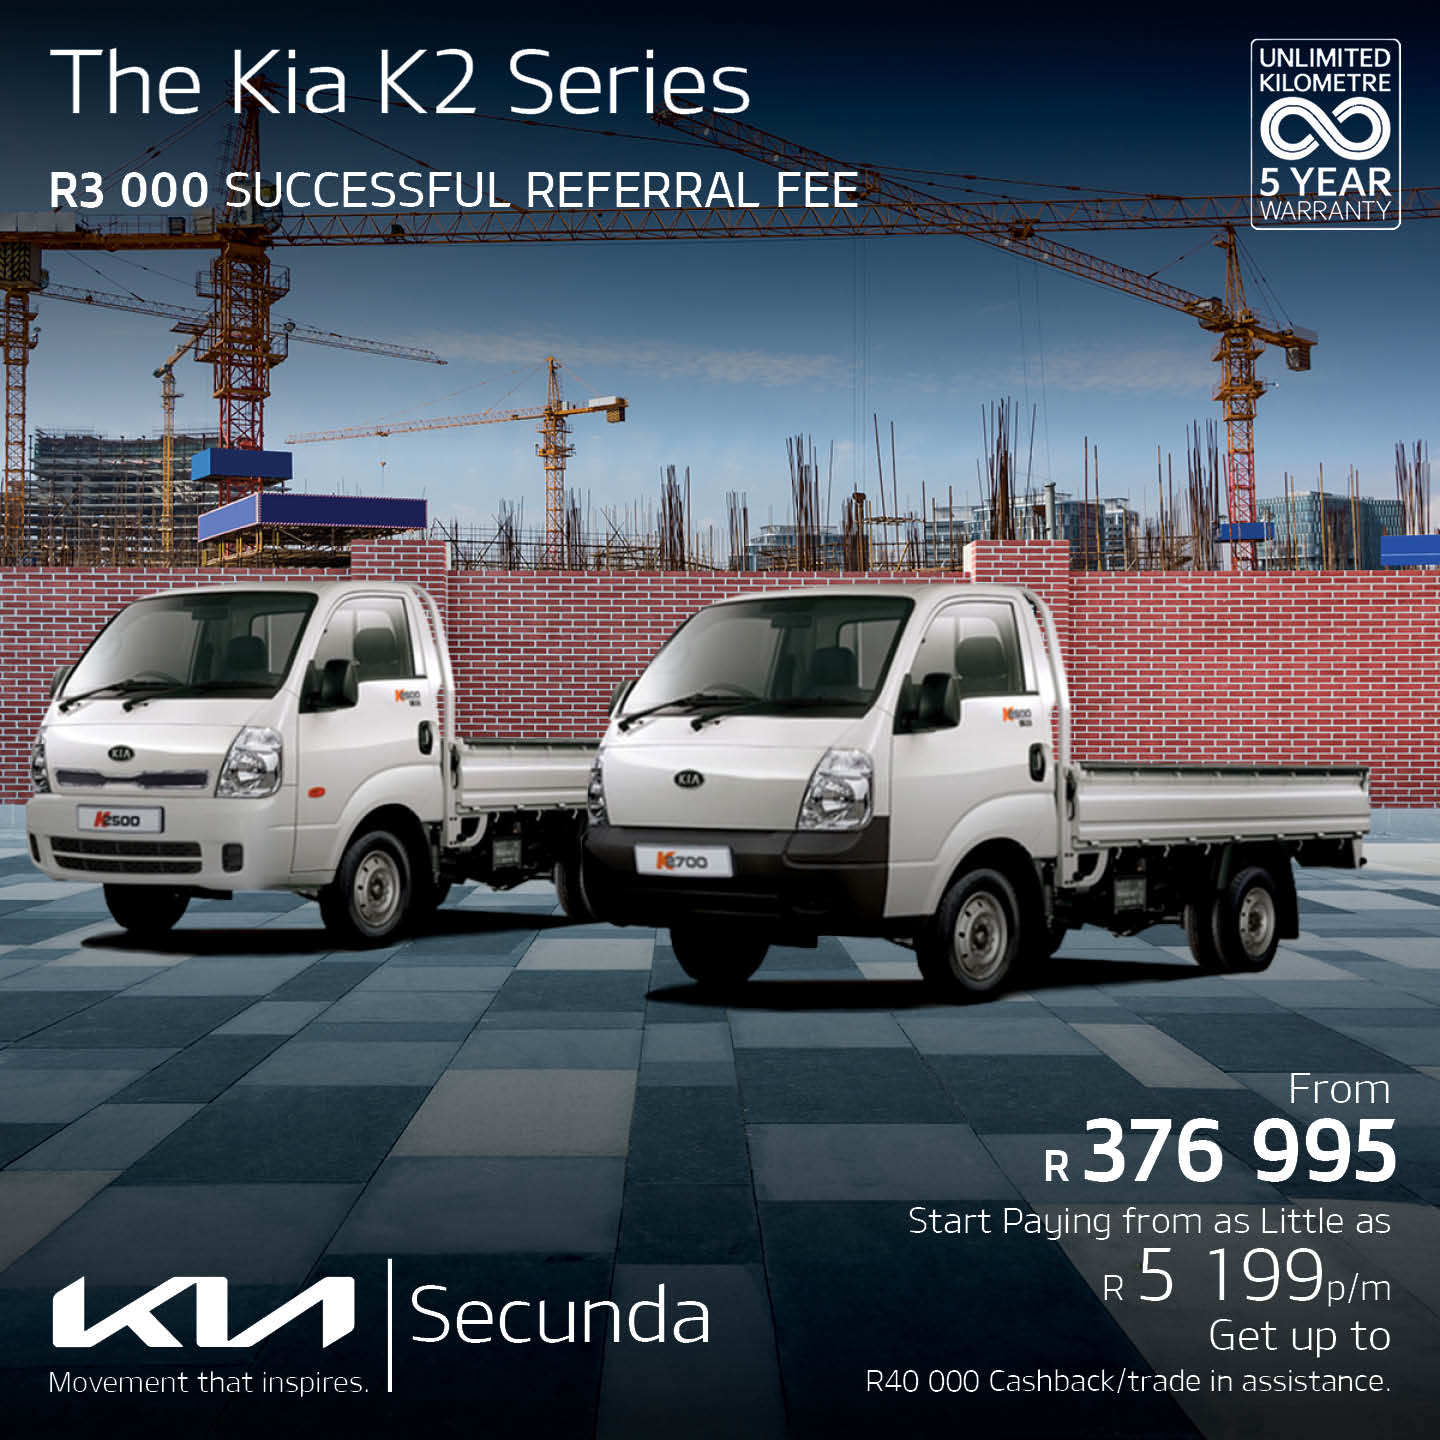 KIA K2 Series image from 